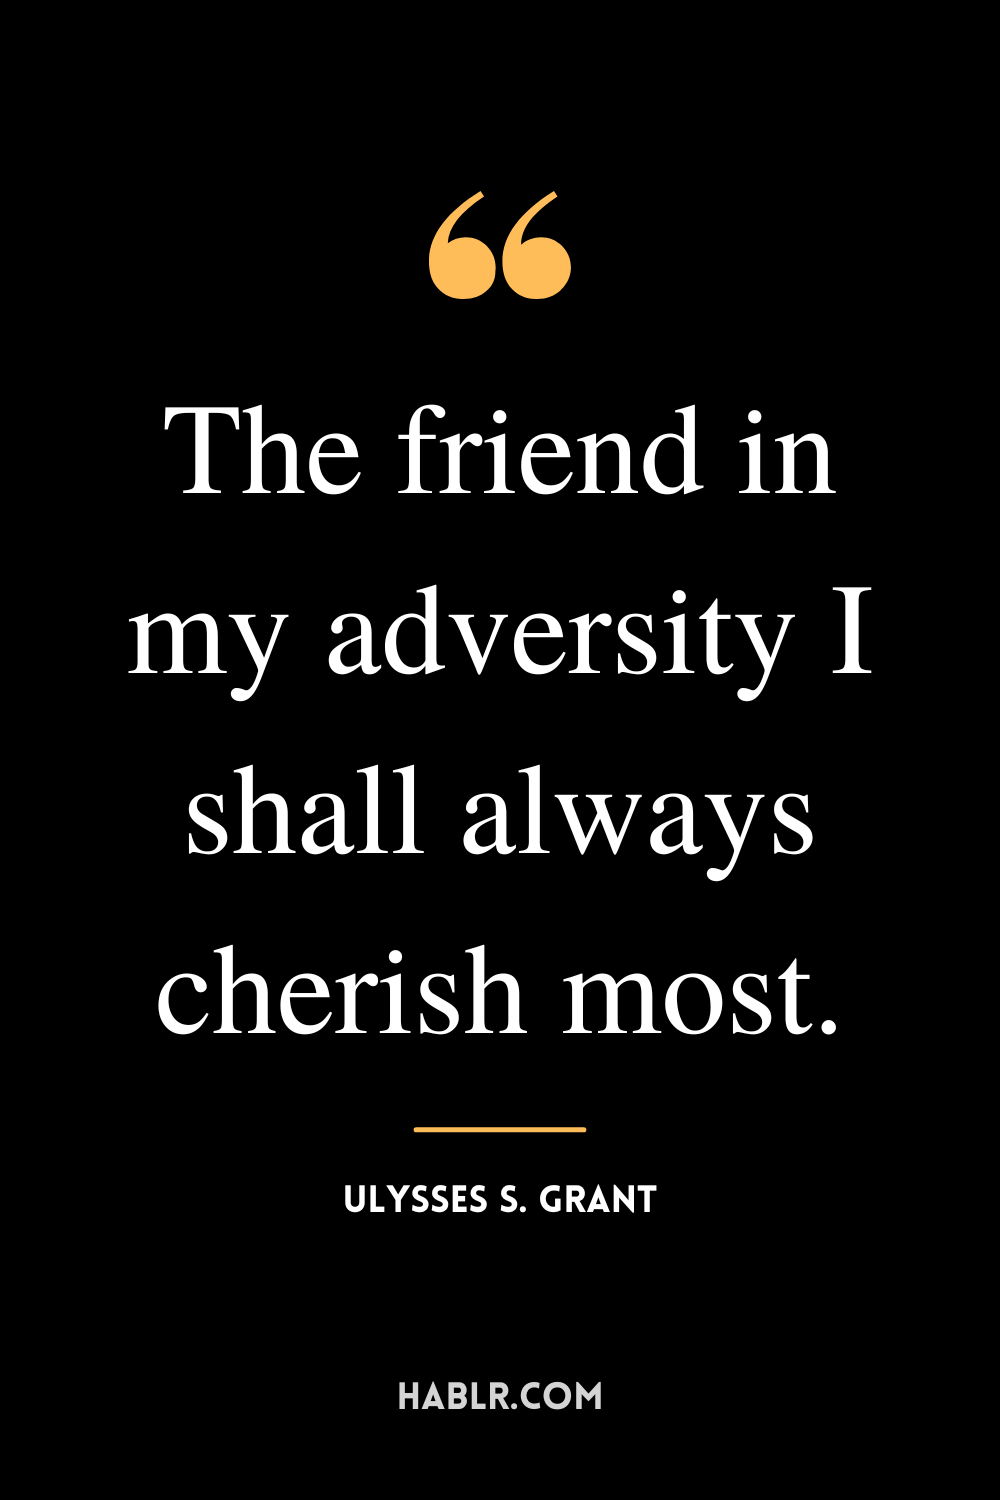 “The friend in my adversity I shall always cherish most.” -Ulysses S. Grant